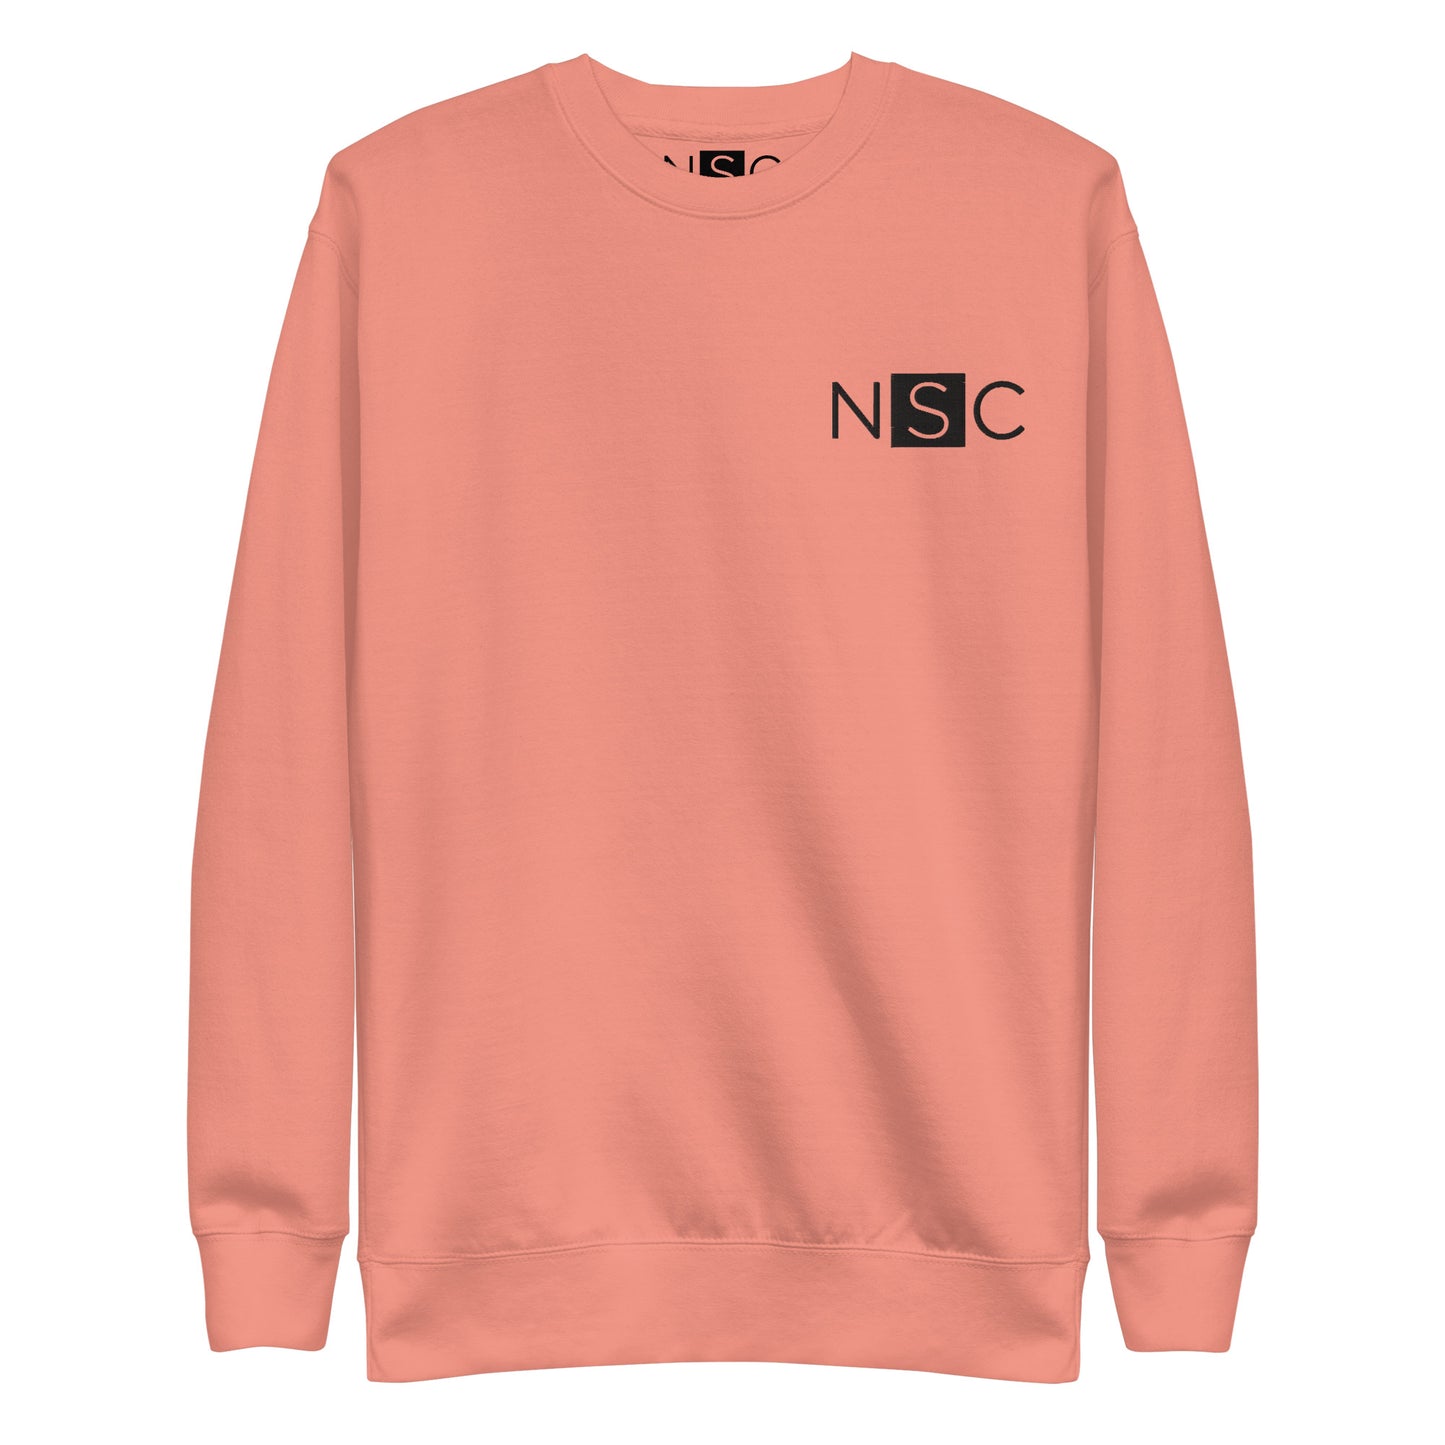 Nashville Sampling Co (NSC) Embroidered Unisex Premium Sweatshirt